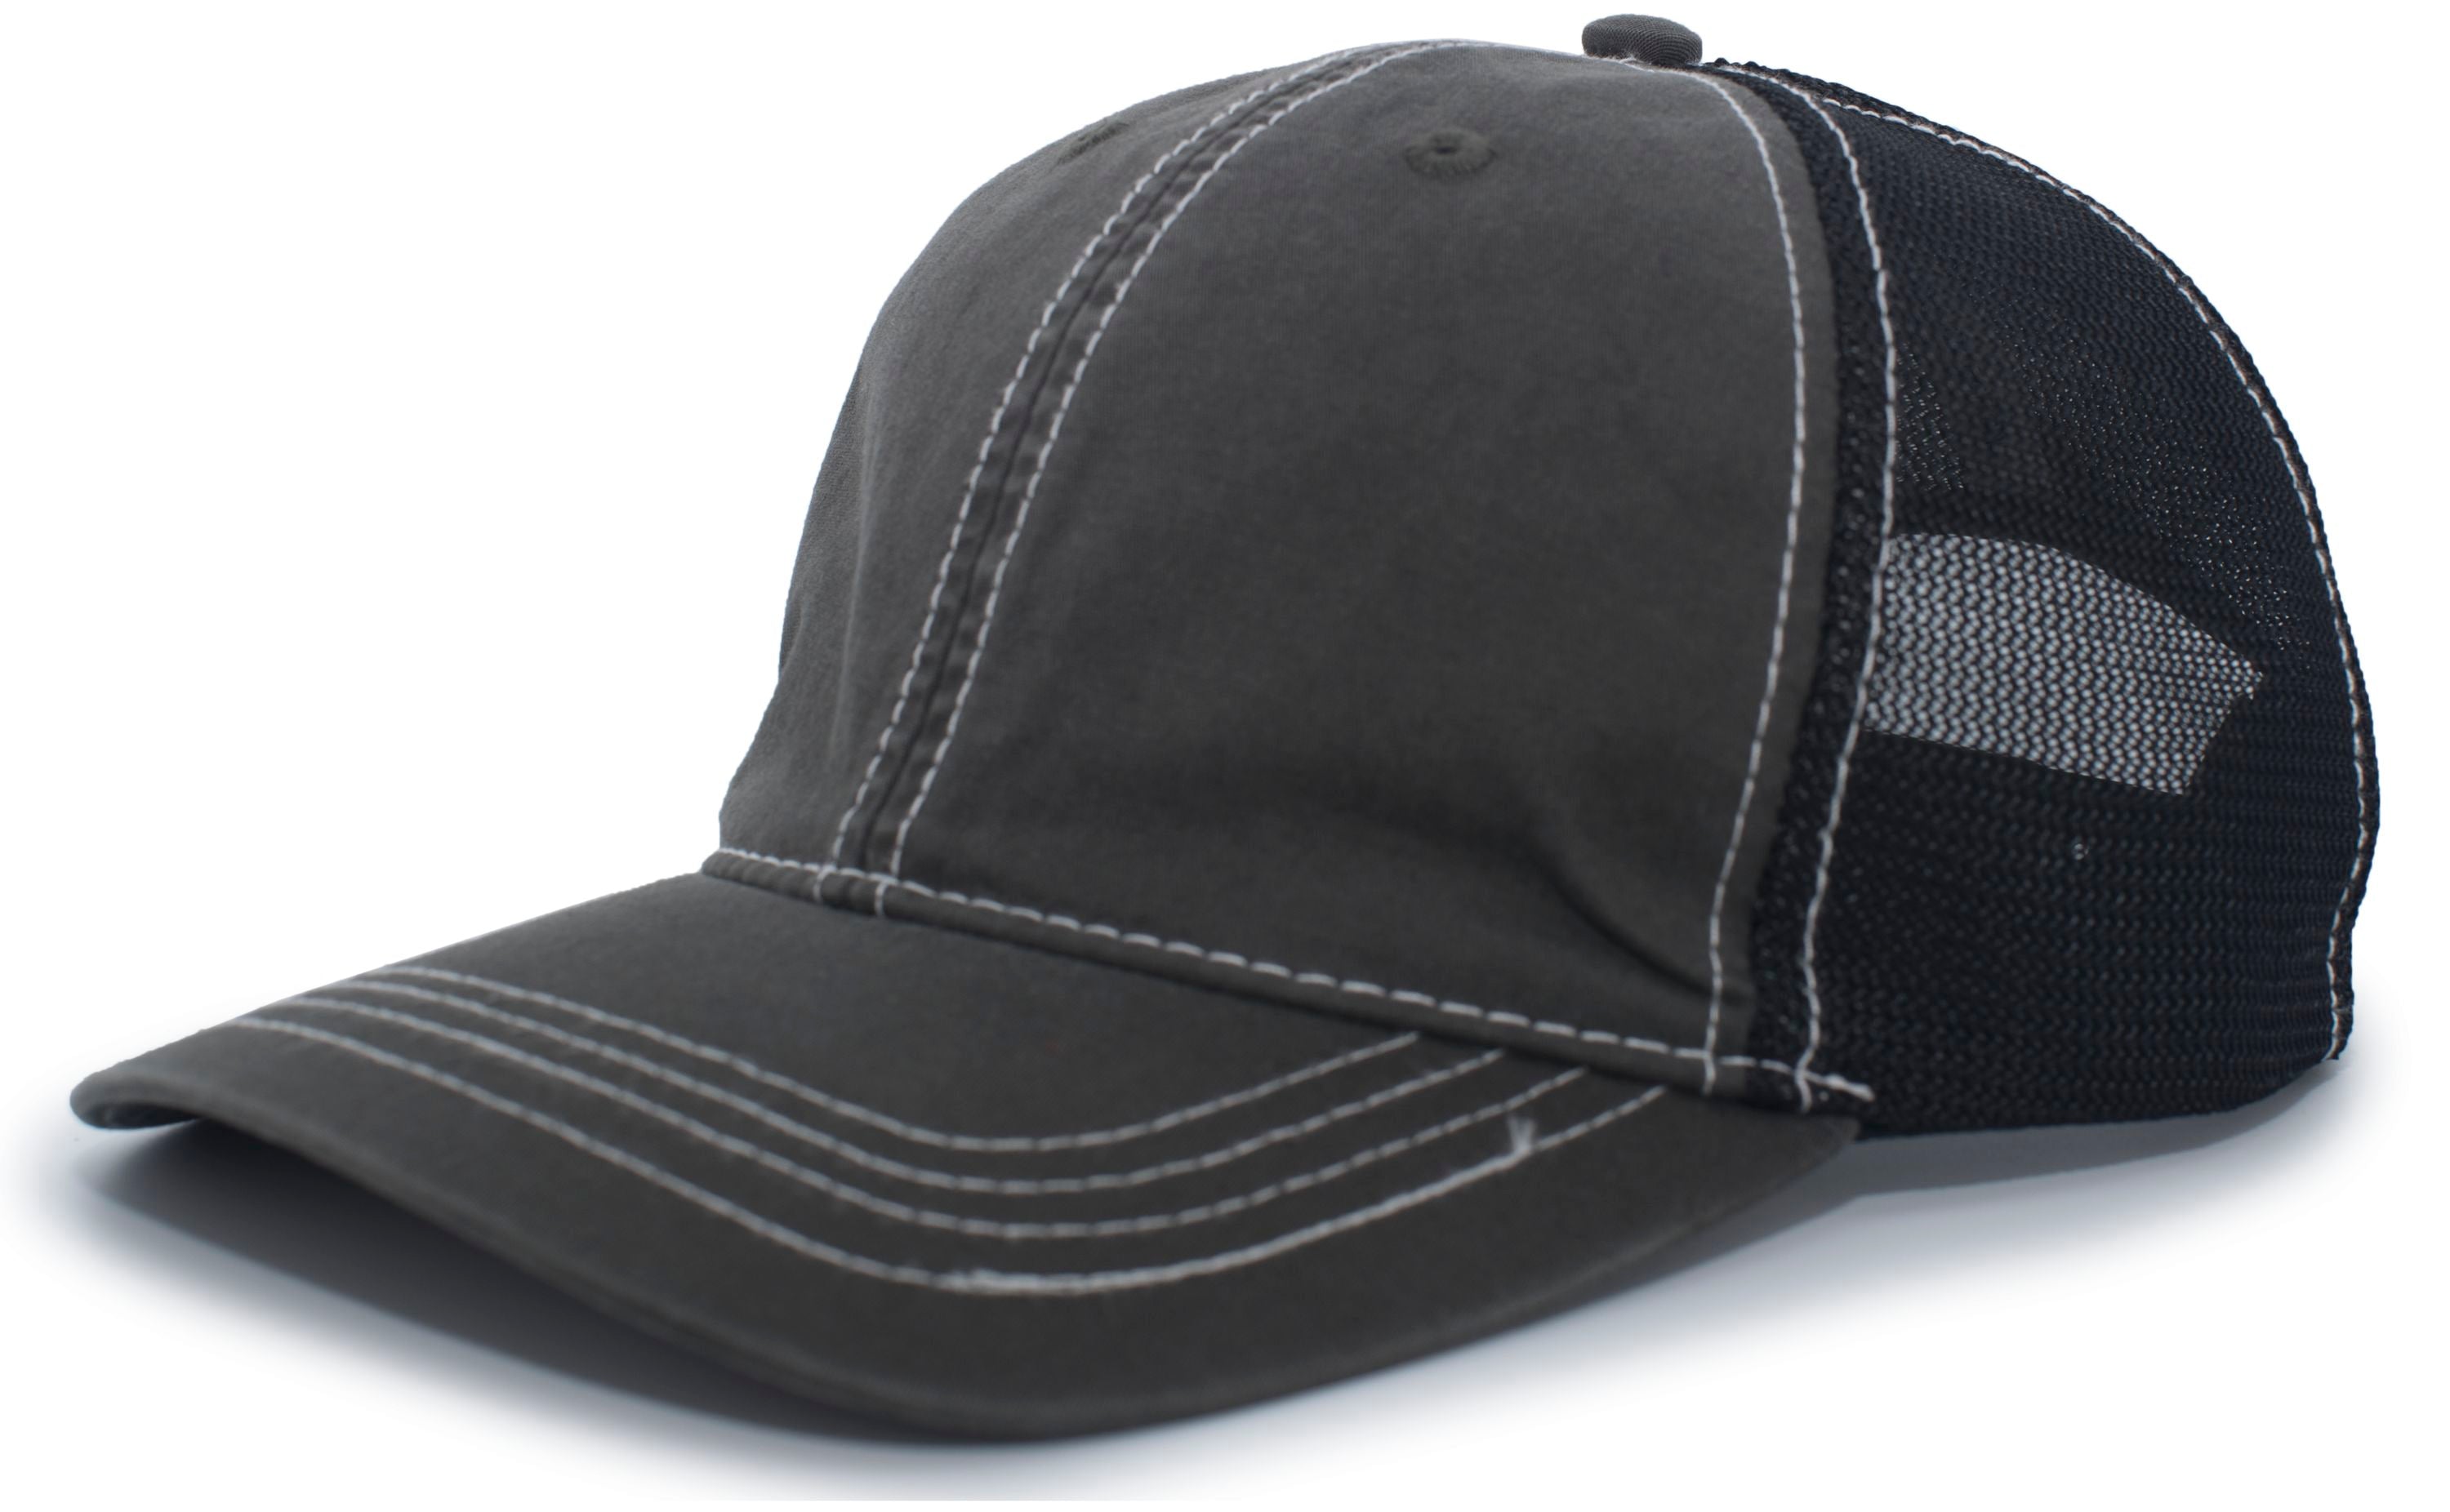 Pacific Headwear Vintage Trucker Snapback Cap